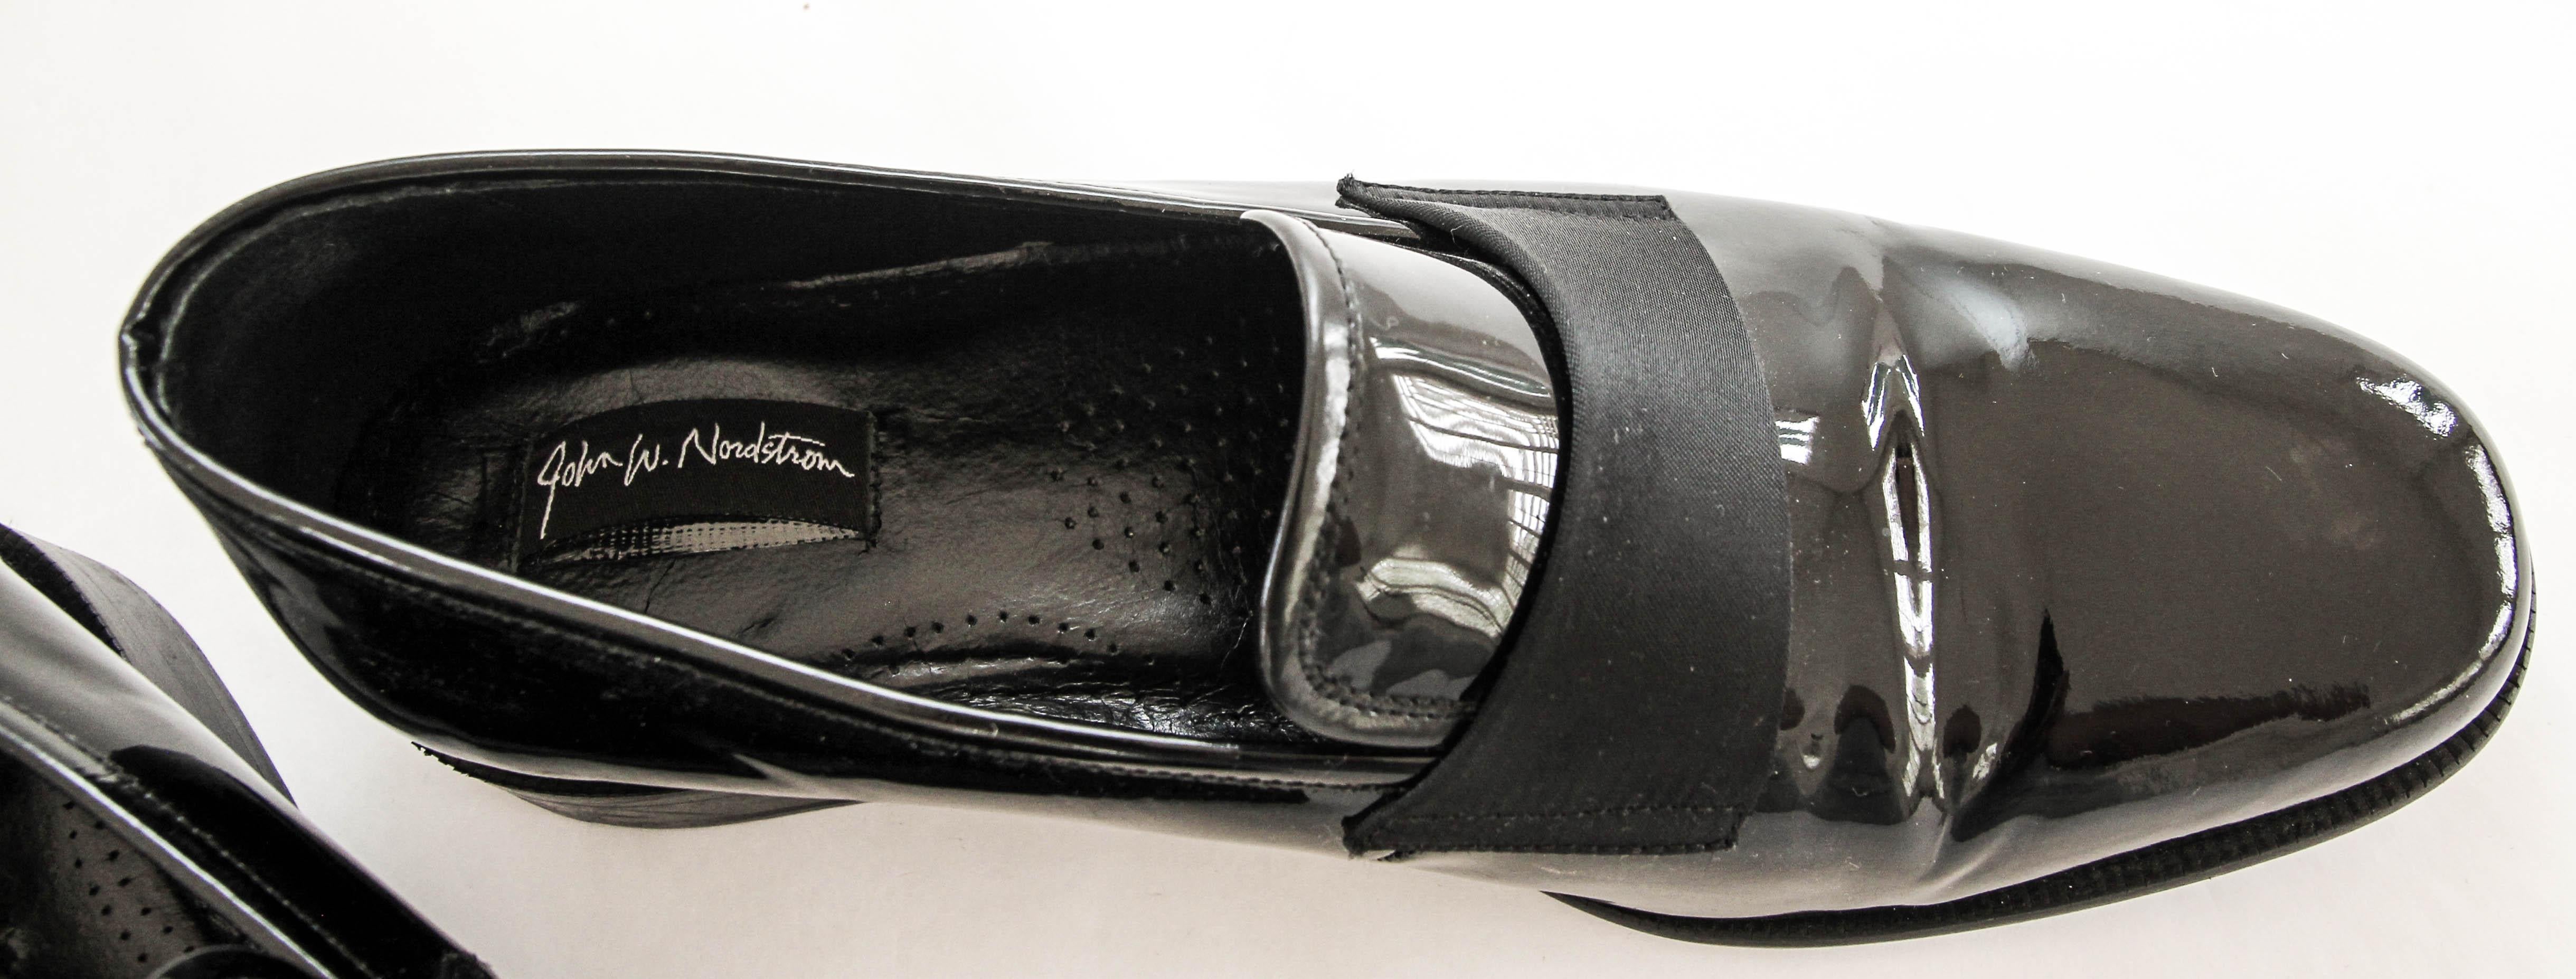 John Varvatos Maestro Men's Slip-On Dress Loafers in Black Patent Leather Sz 9 M For Sale 3